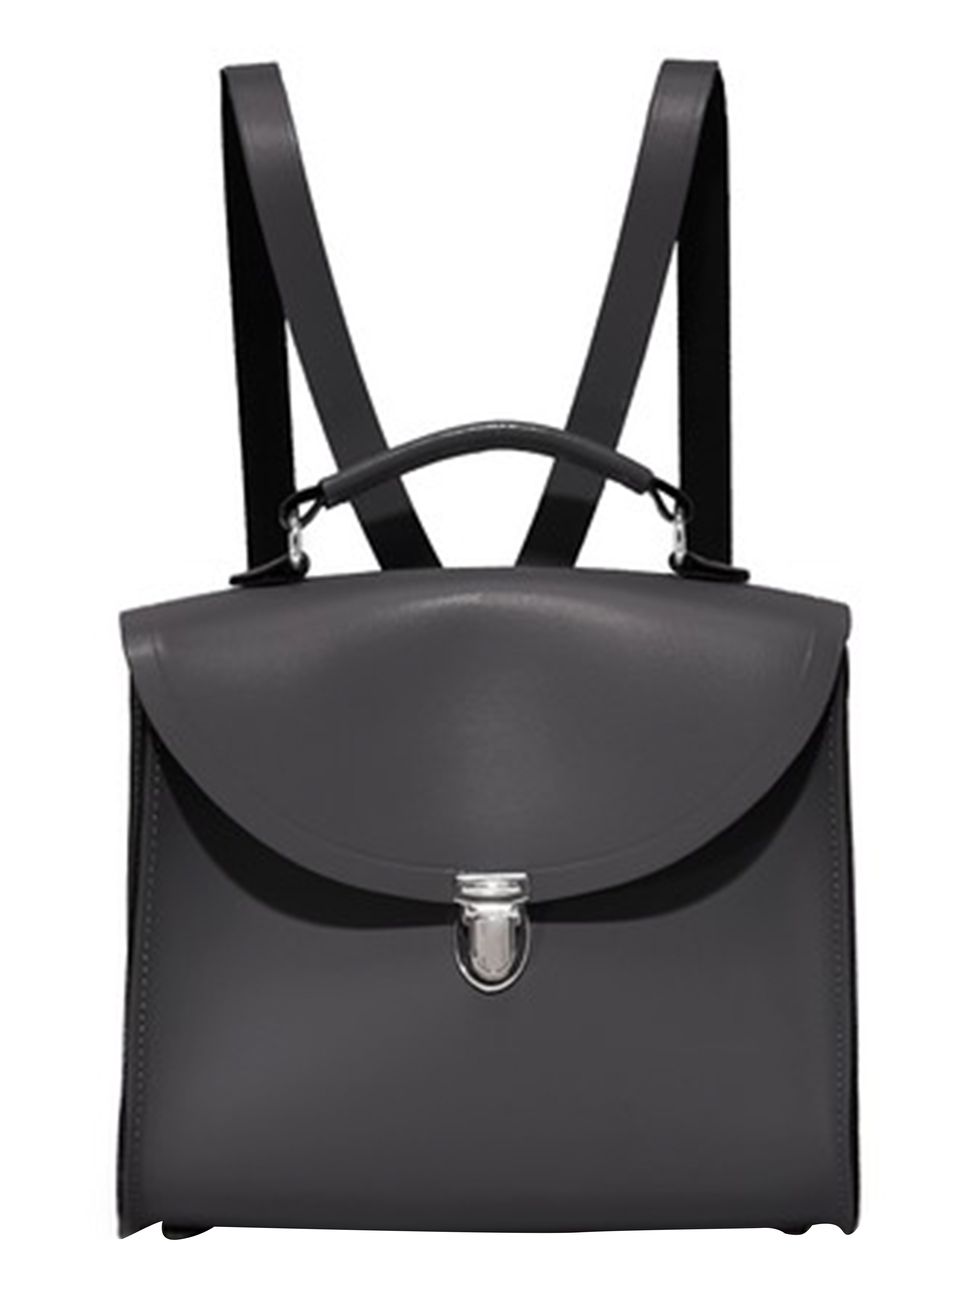 Handbag, Bag, Product, Black, Fashion accessory, Leather, Shoulder bag, Tote bag, Material property, Black-and-white, 